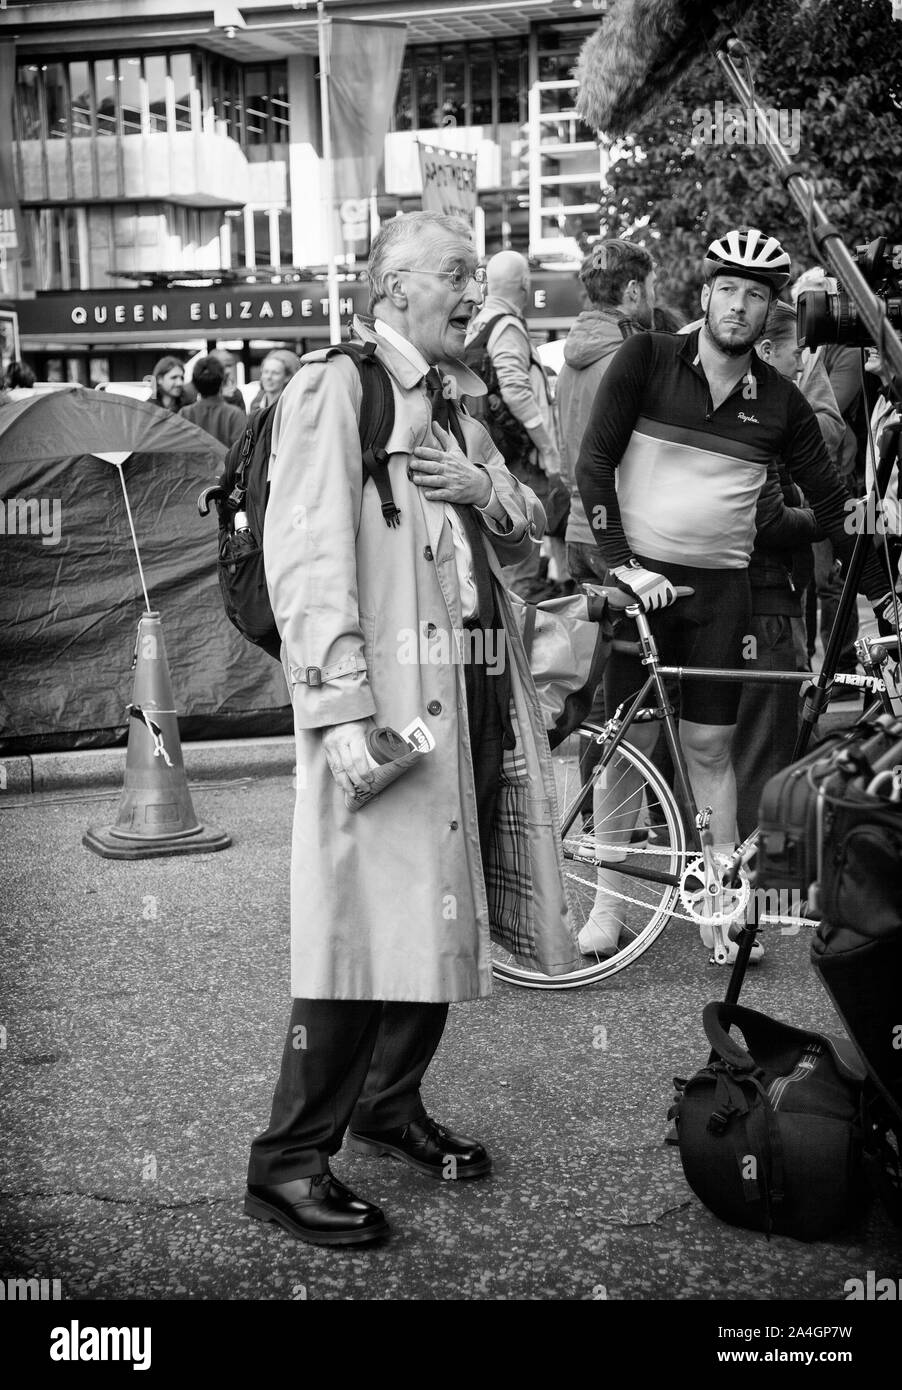 Hilary Benn, homme politique français, 2019, Westminster, London, UK Banque D'Images